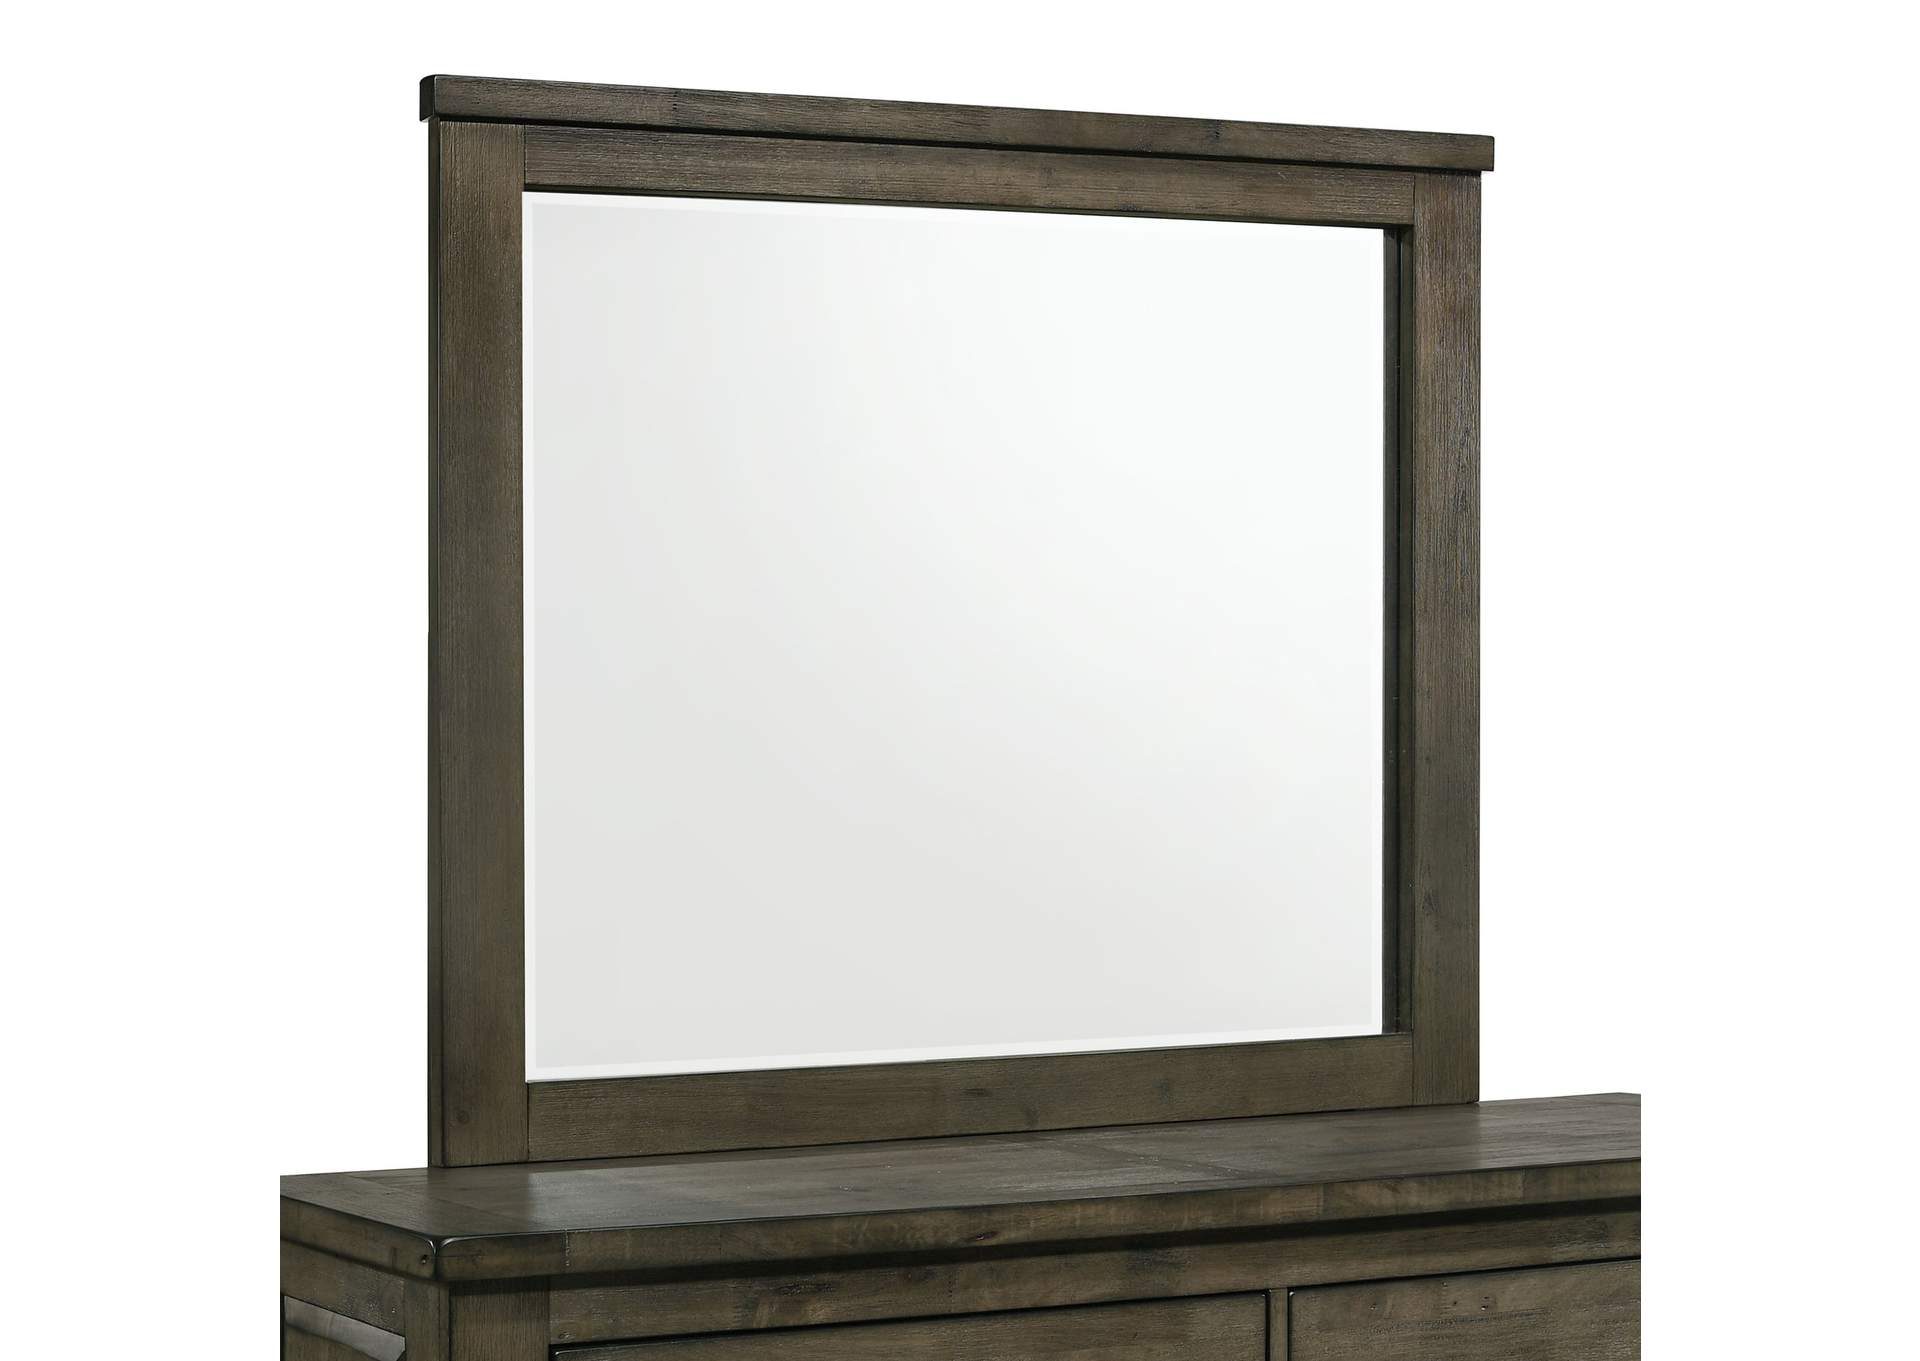 Maverick Dresser & Mirror Grey,Elements